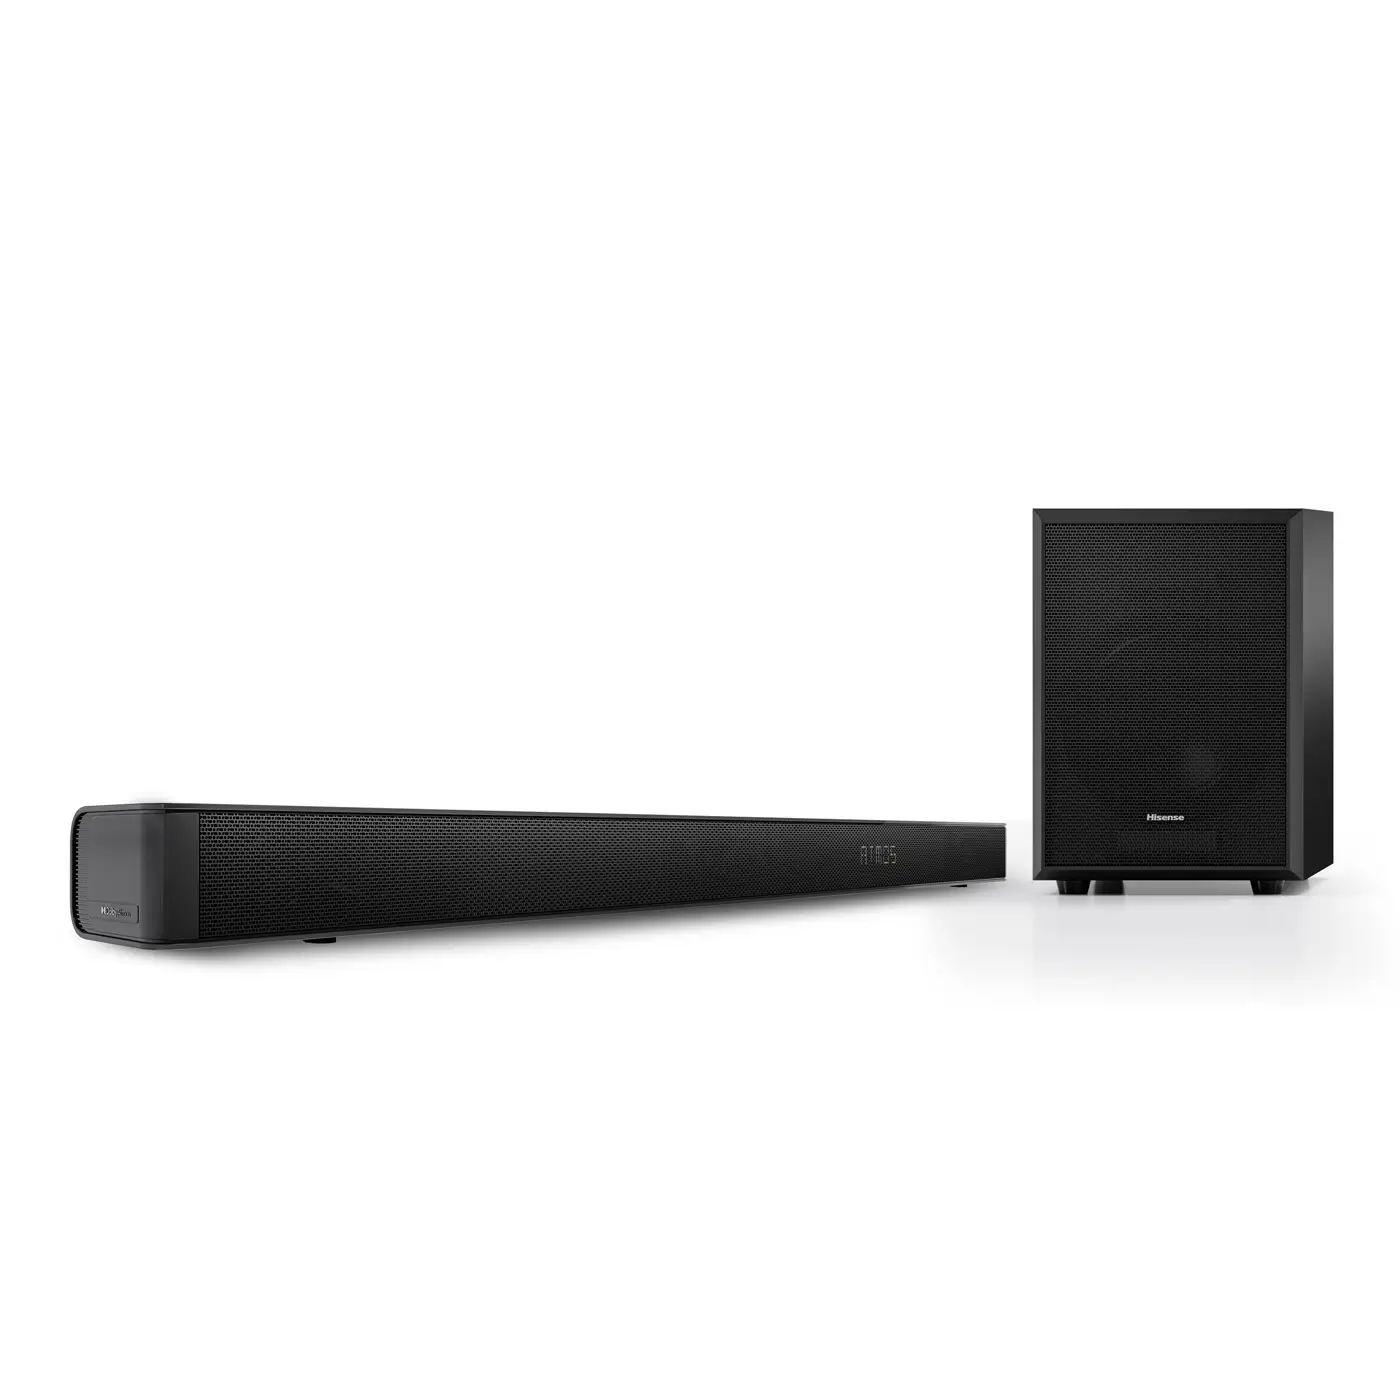 HISENSE AX3100G Soundbar 3.1ch; 300W speaker; Bluetooth 5.0; 5 DJ effects; IPX4 waterproof top-panel; 15hrs battery